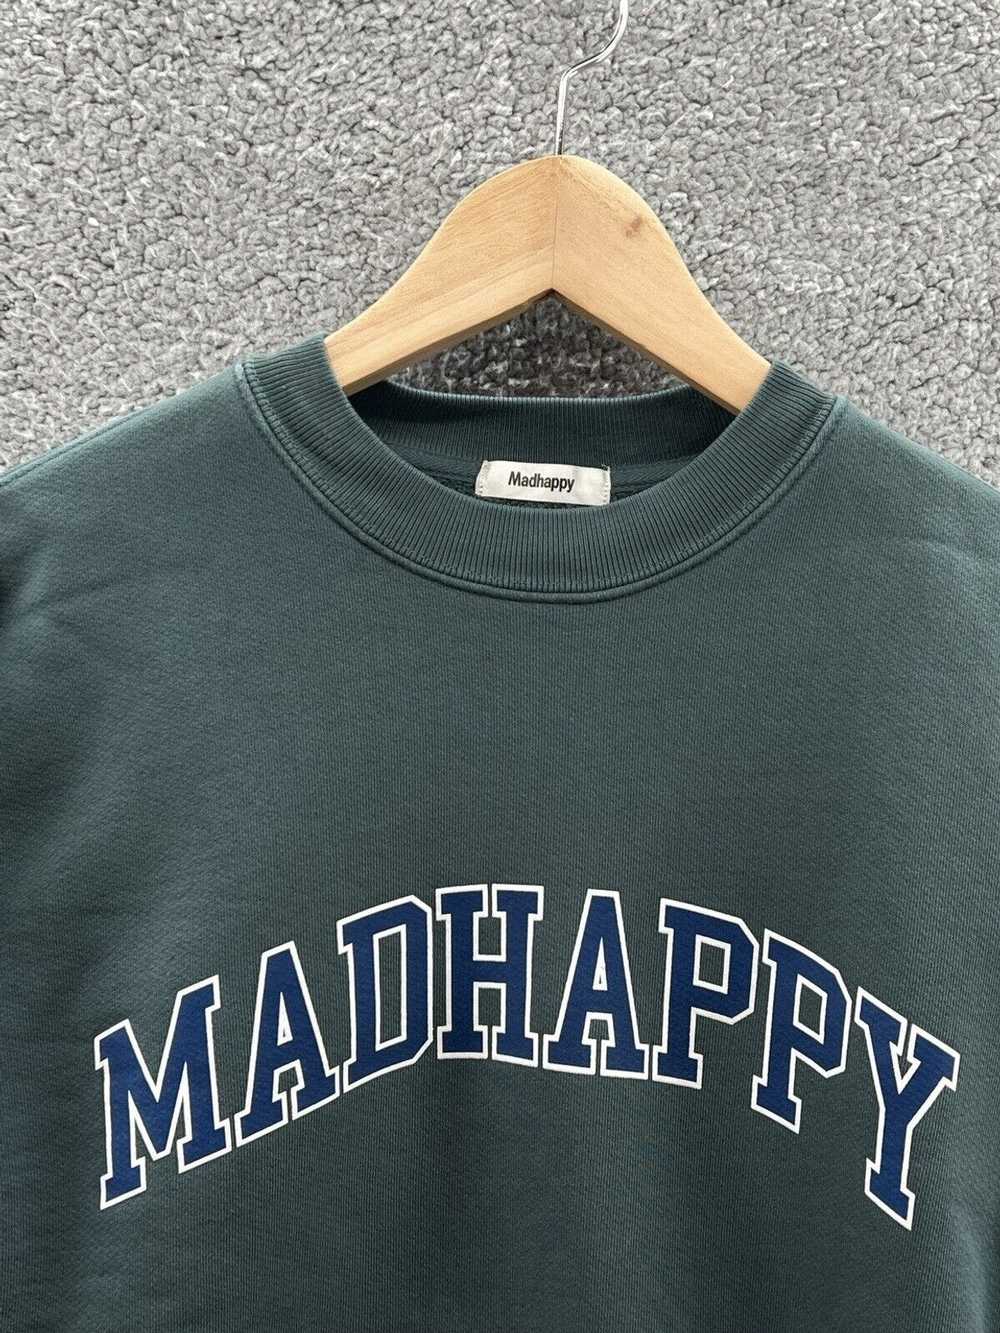 Madhappy Madhappy Navy Blue Arc Logo Green Crewne… - image 2